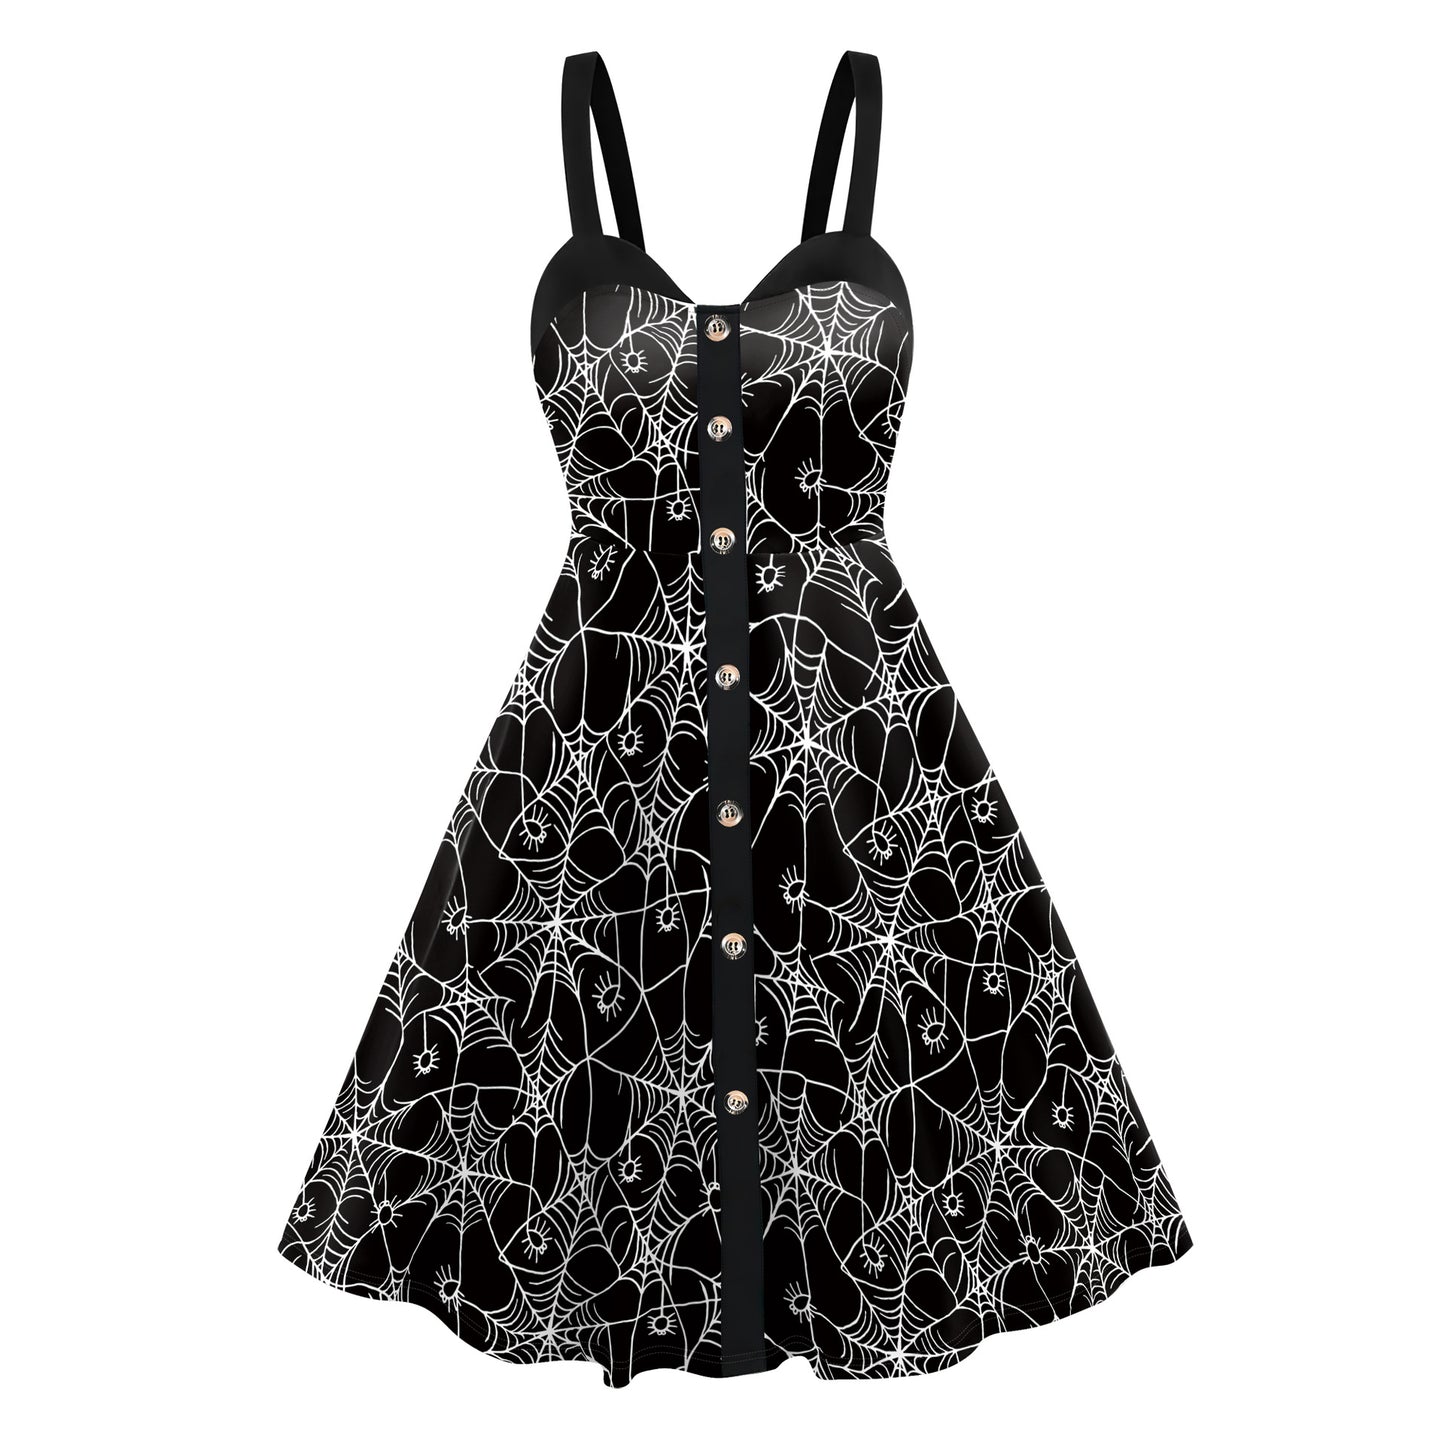 Women's Skeleton Spider Web Digital Printing Slip Dress